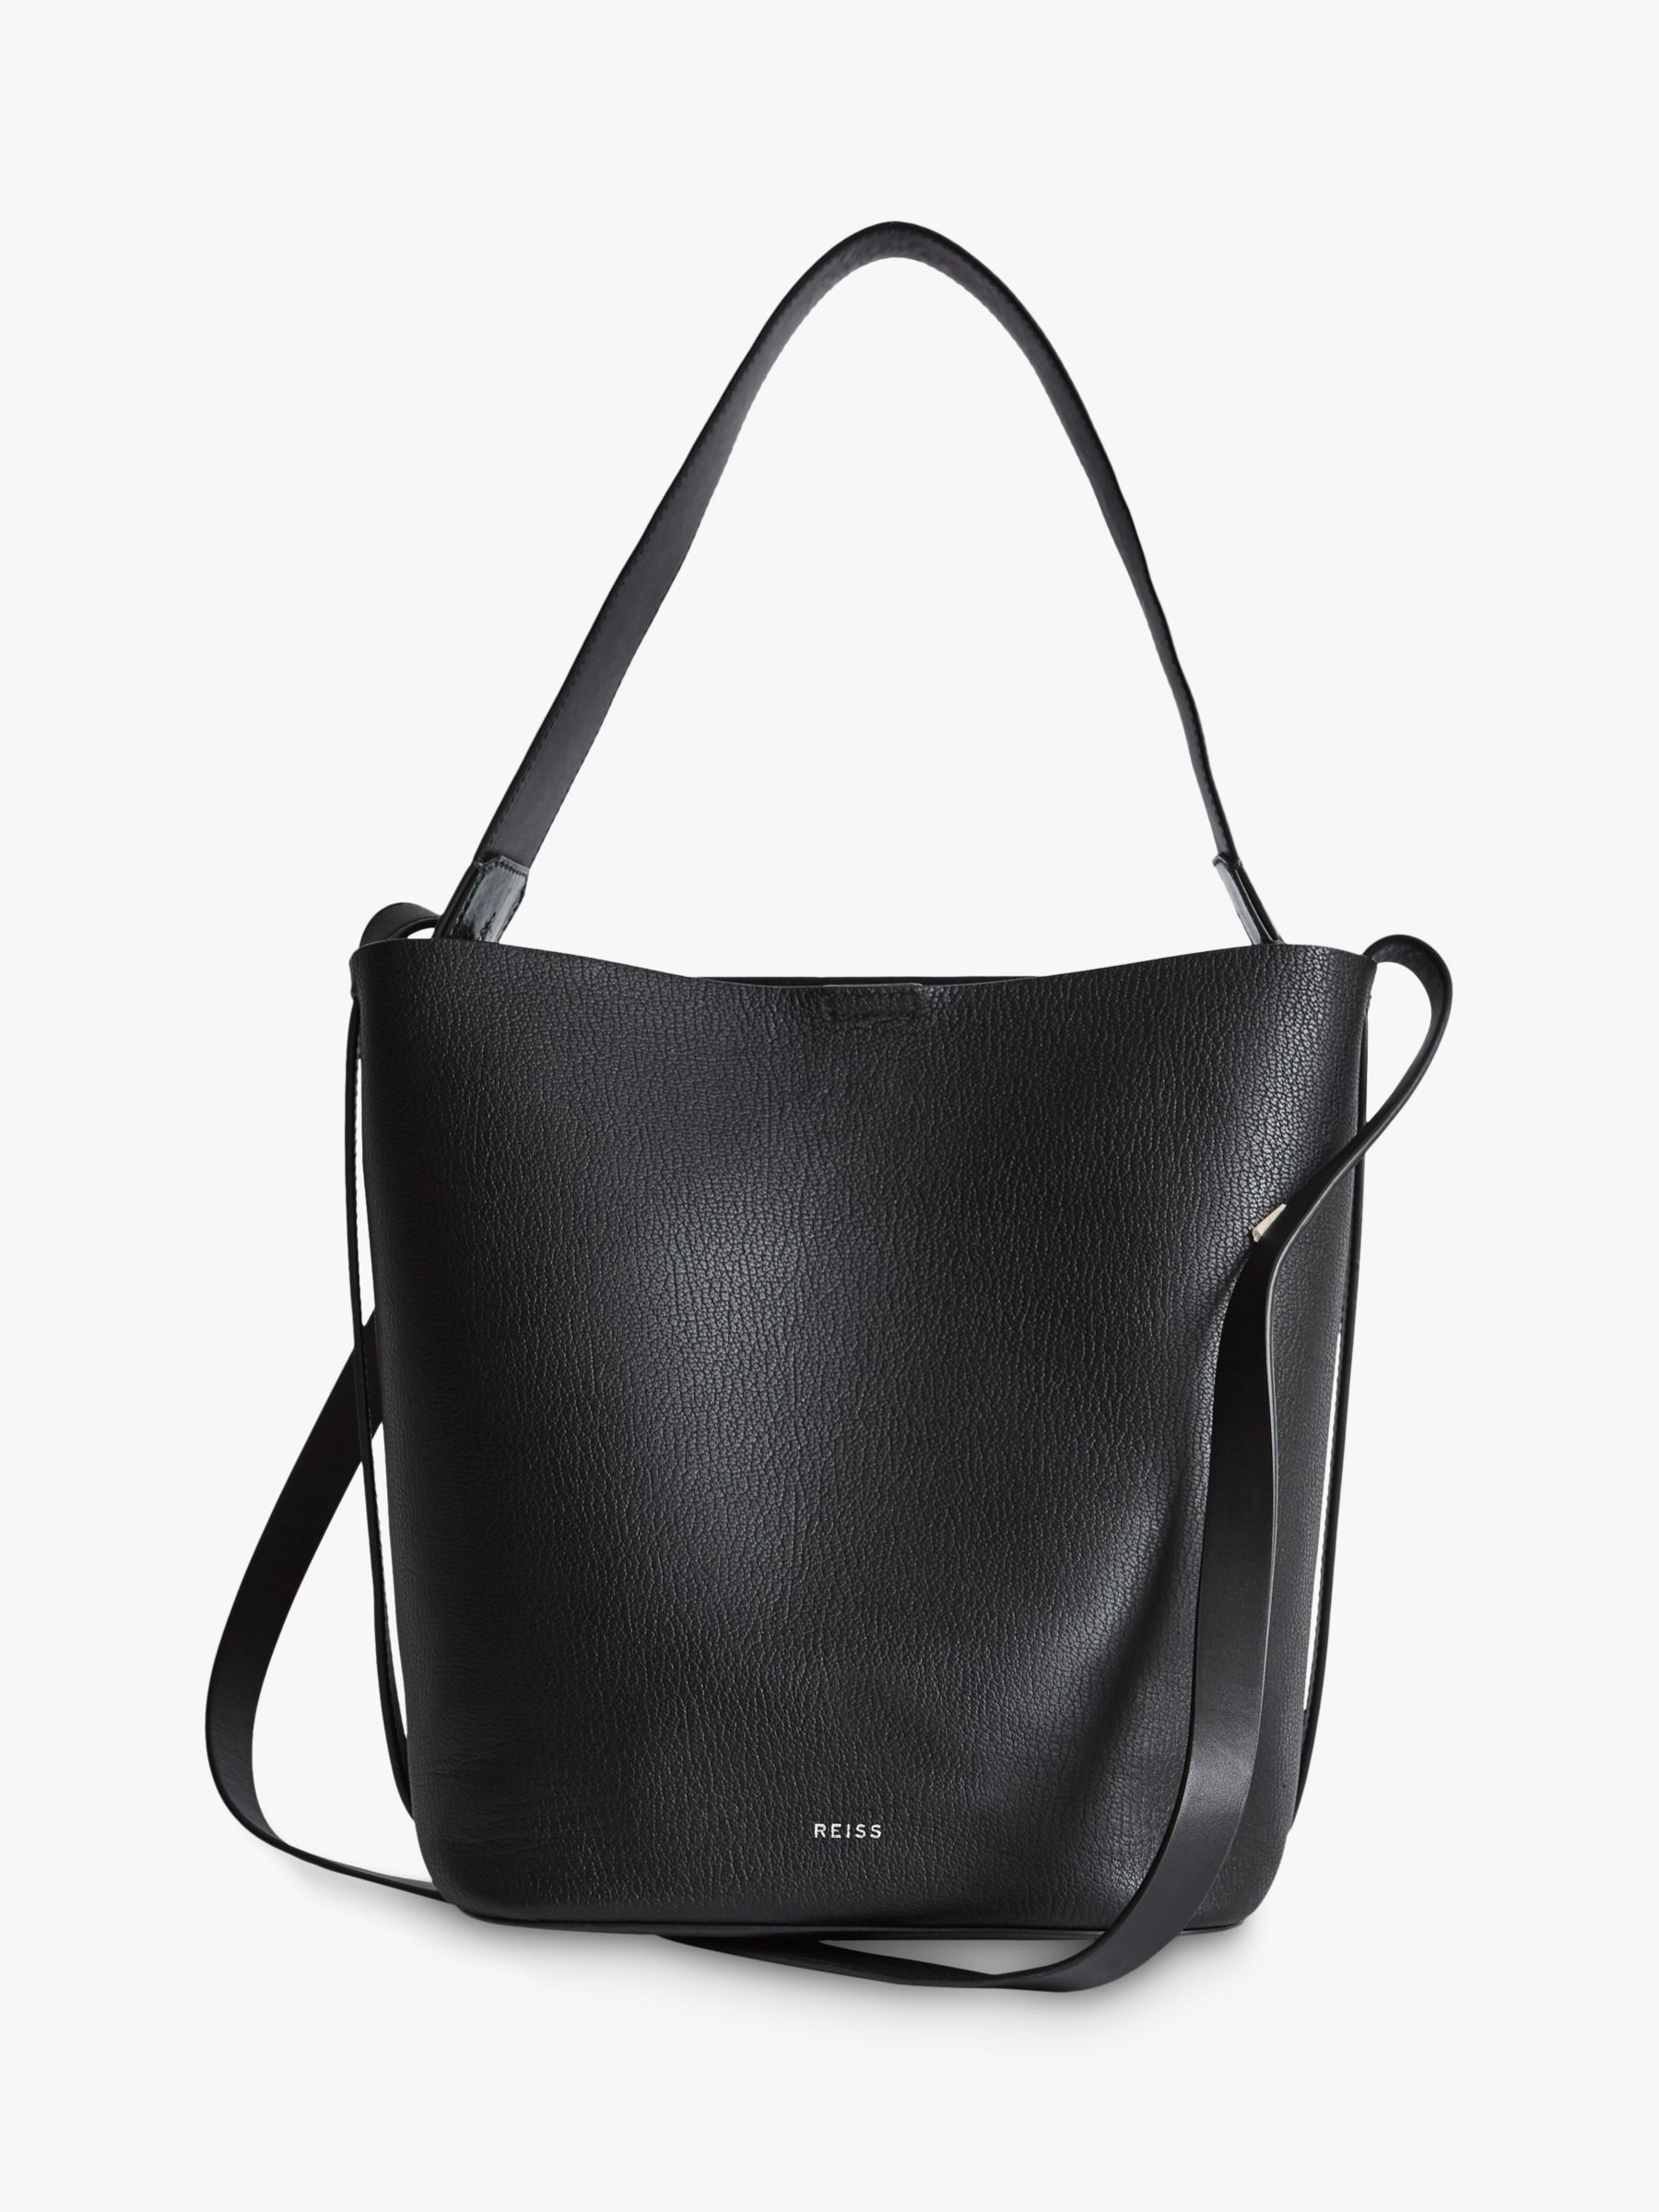 Reiss Hudson Leather Bucket Bag at John Lewis & Partners